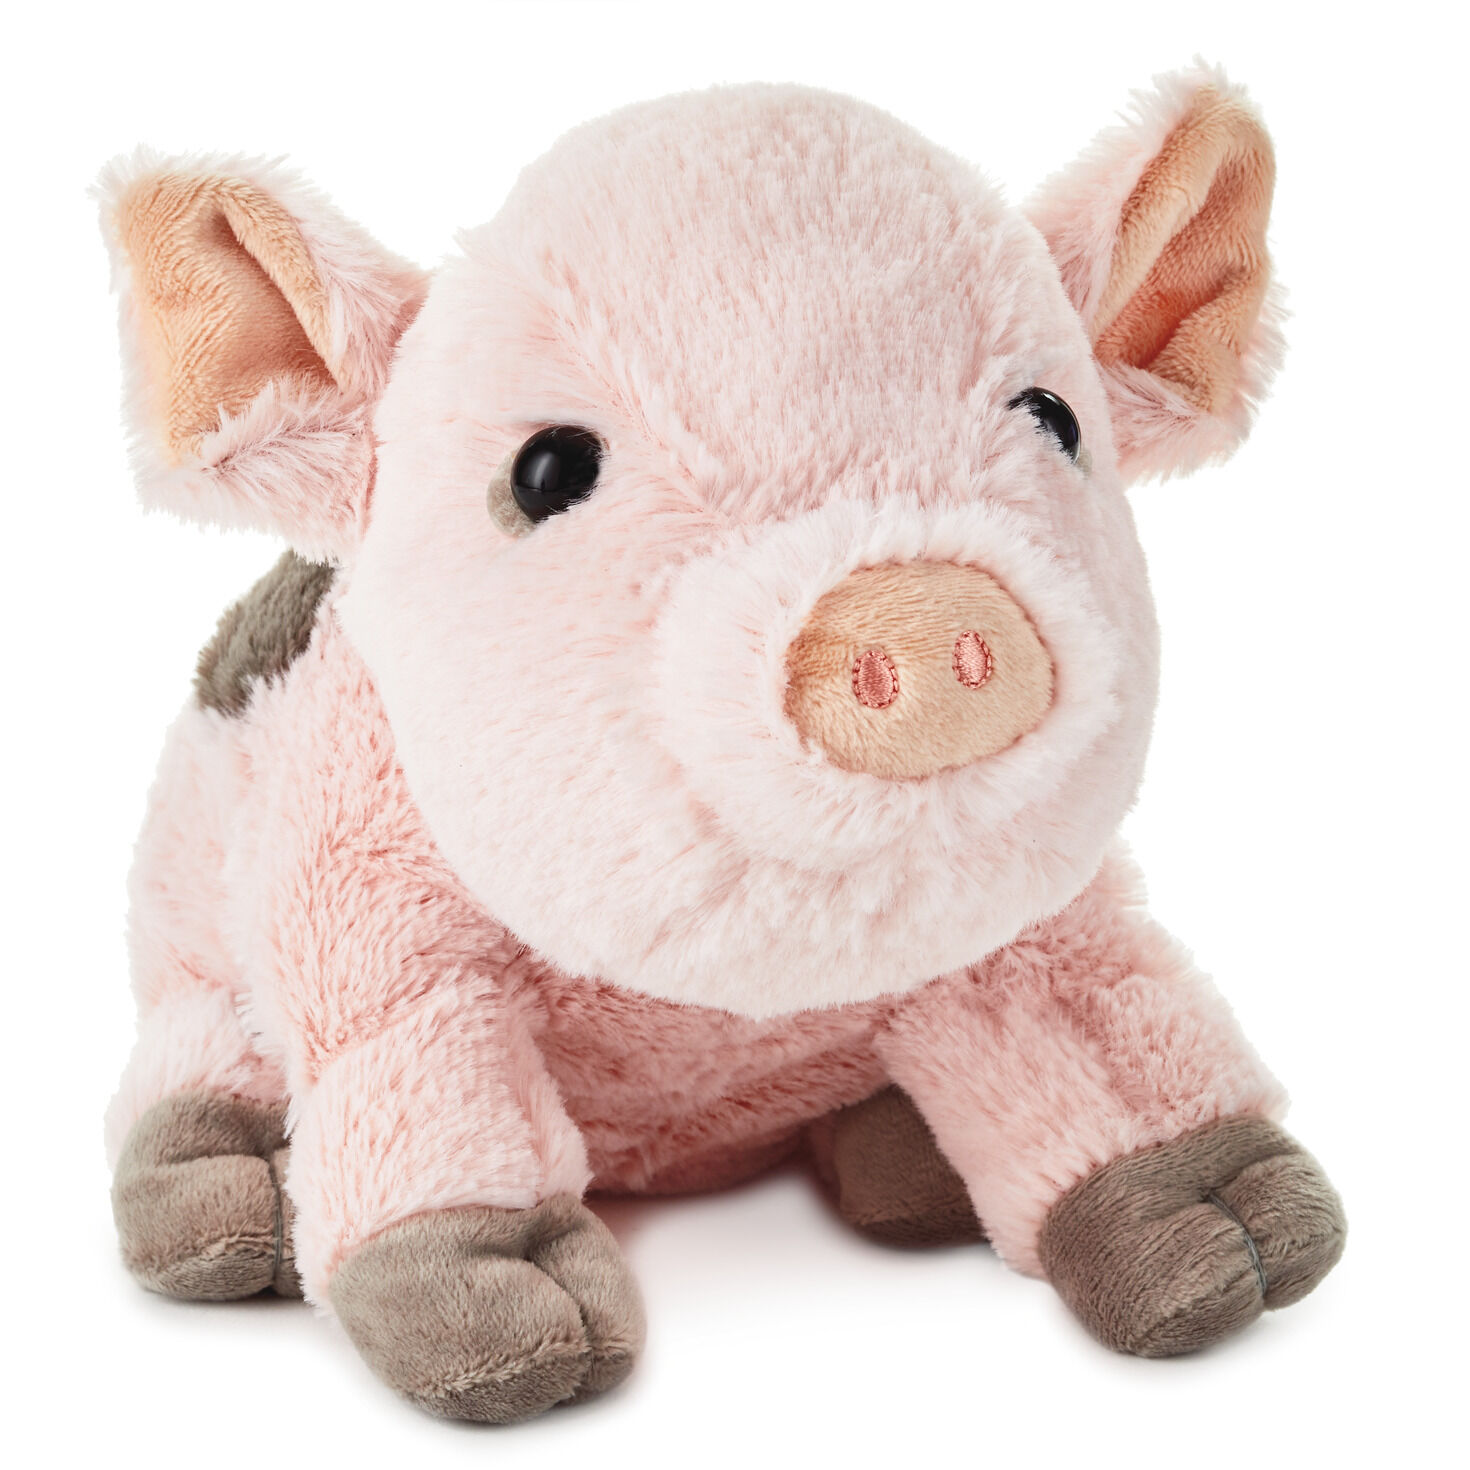 pig stuffed animal